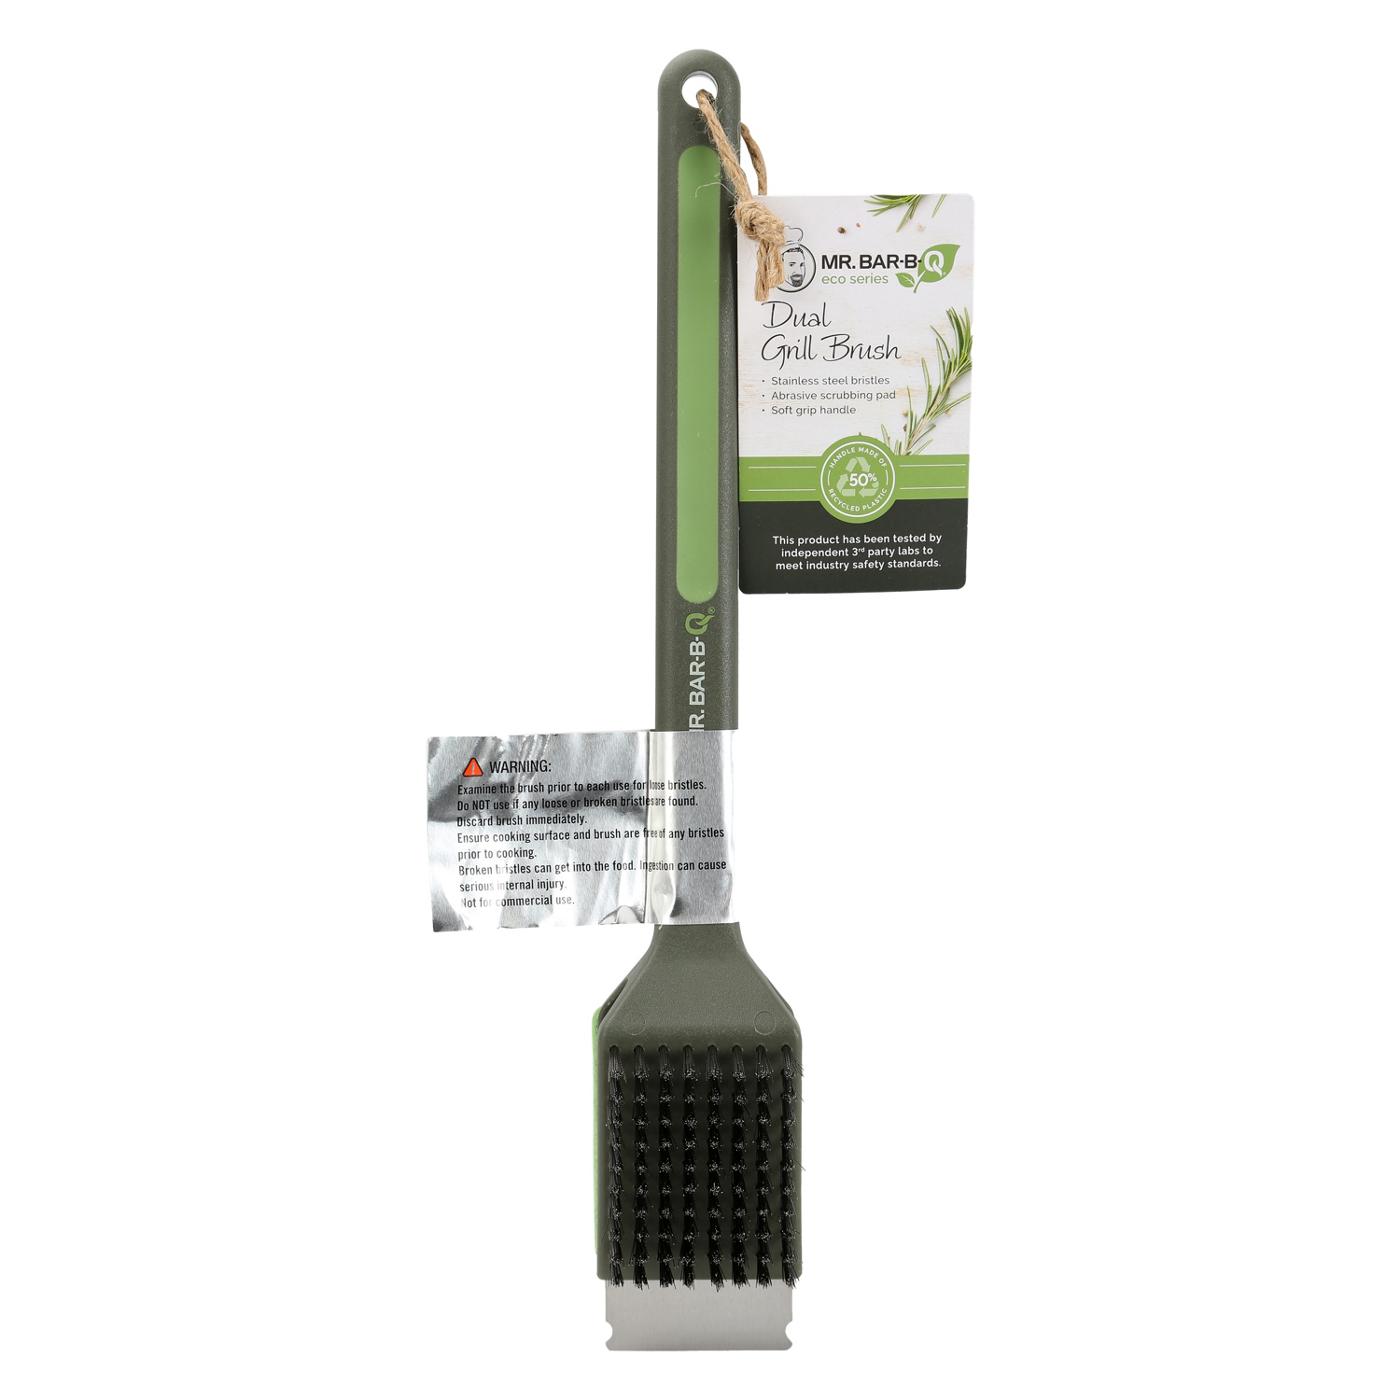 Mr. Bar-B-Q Eco Series Dual Grill Brush; image 1 of 2